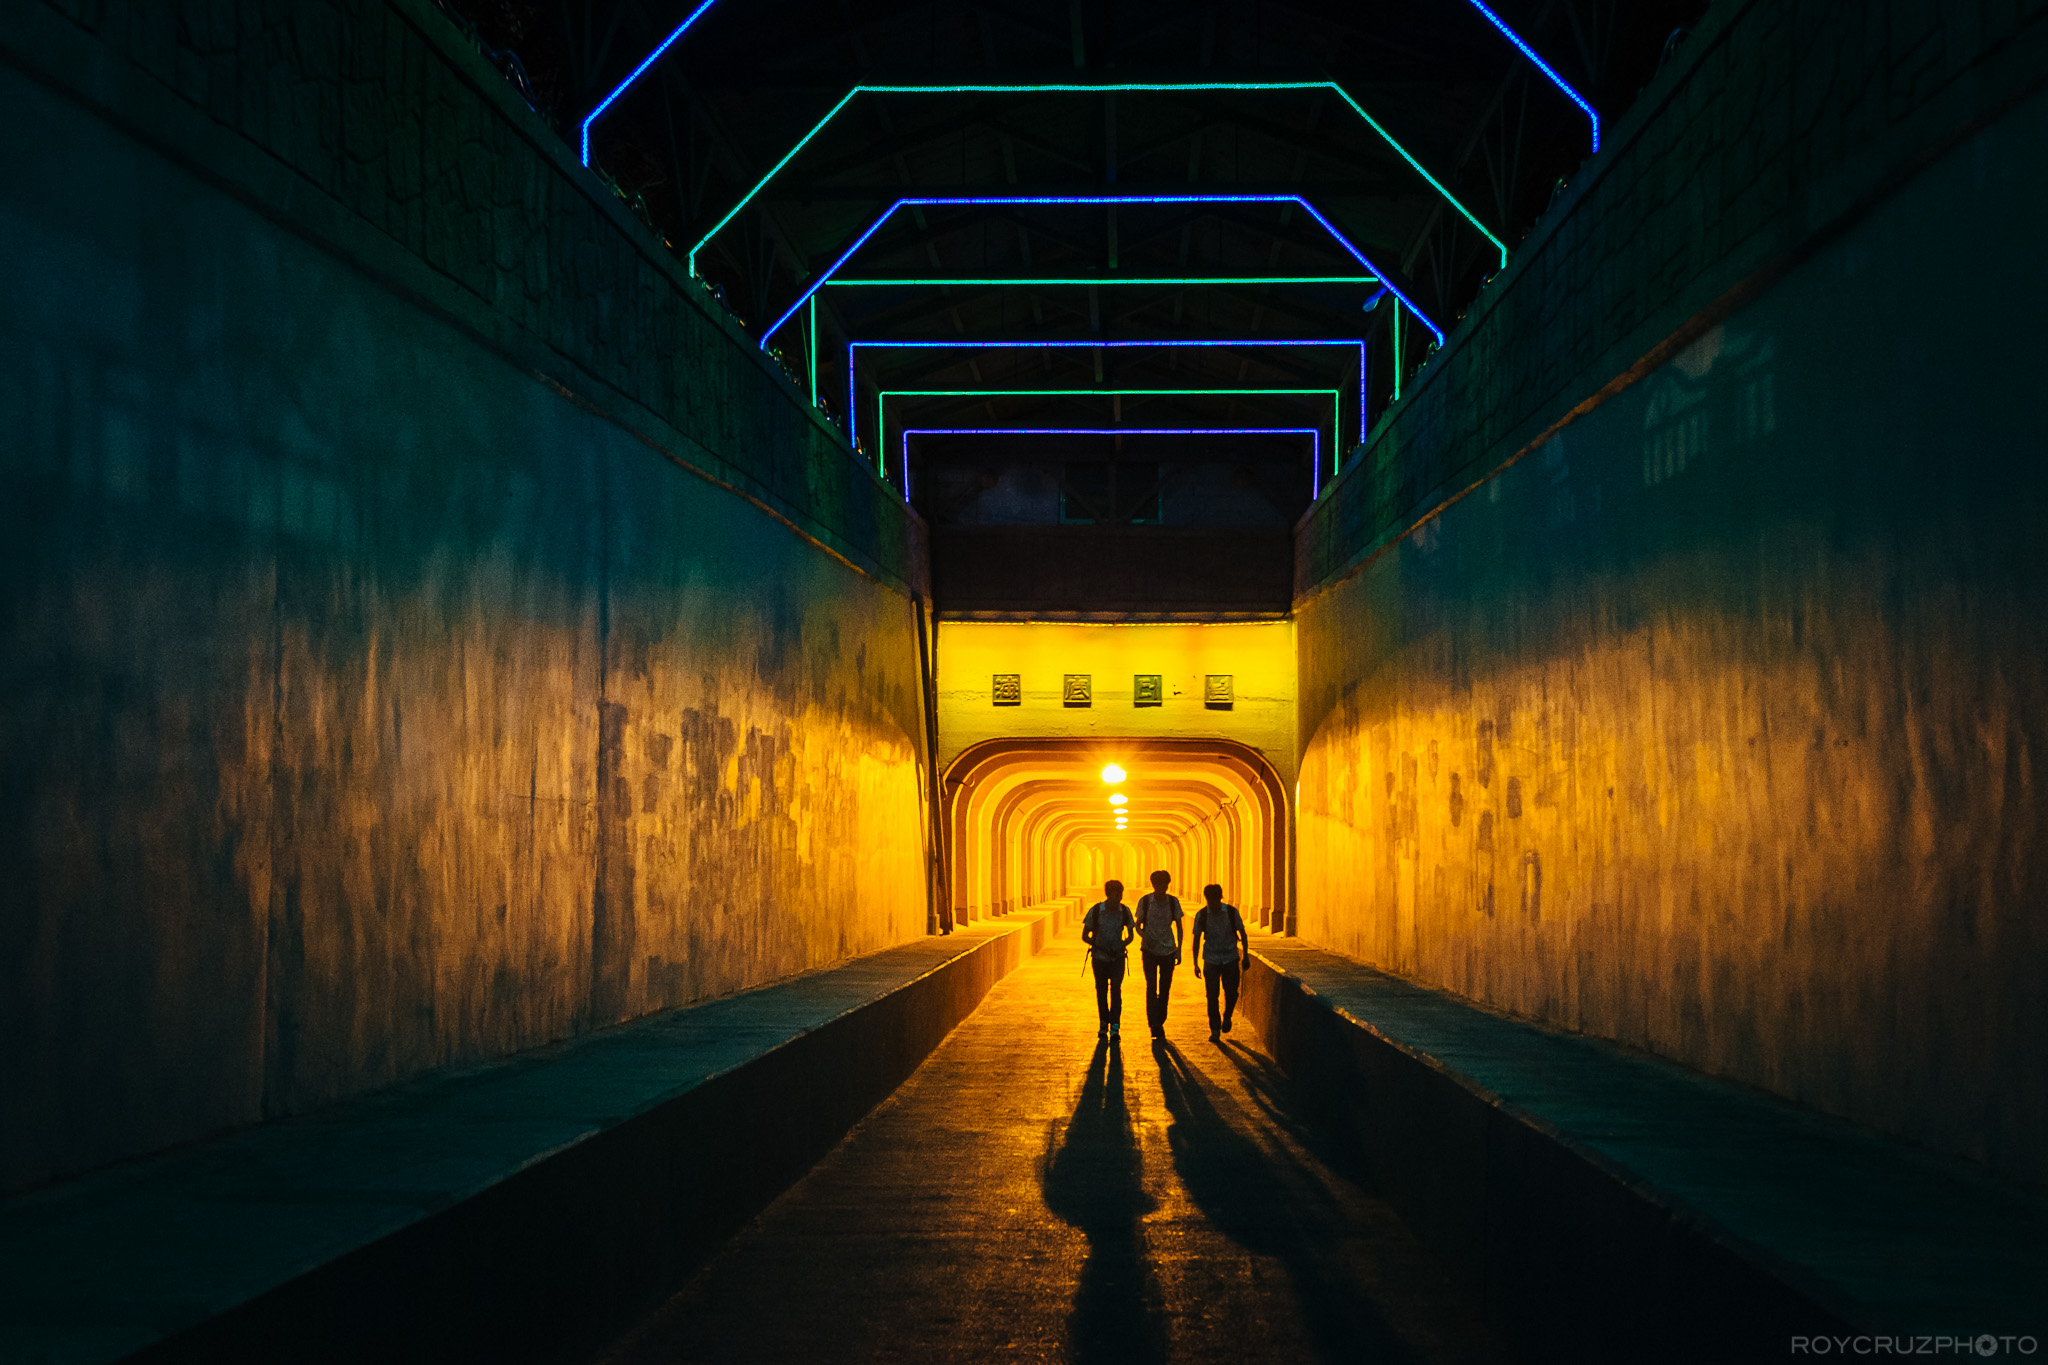 Undersea Tunnel (통영해저 터널) https://goo.gl/maps/pZbv4hv9Haz